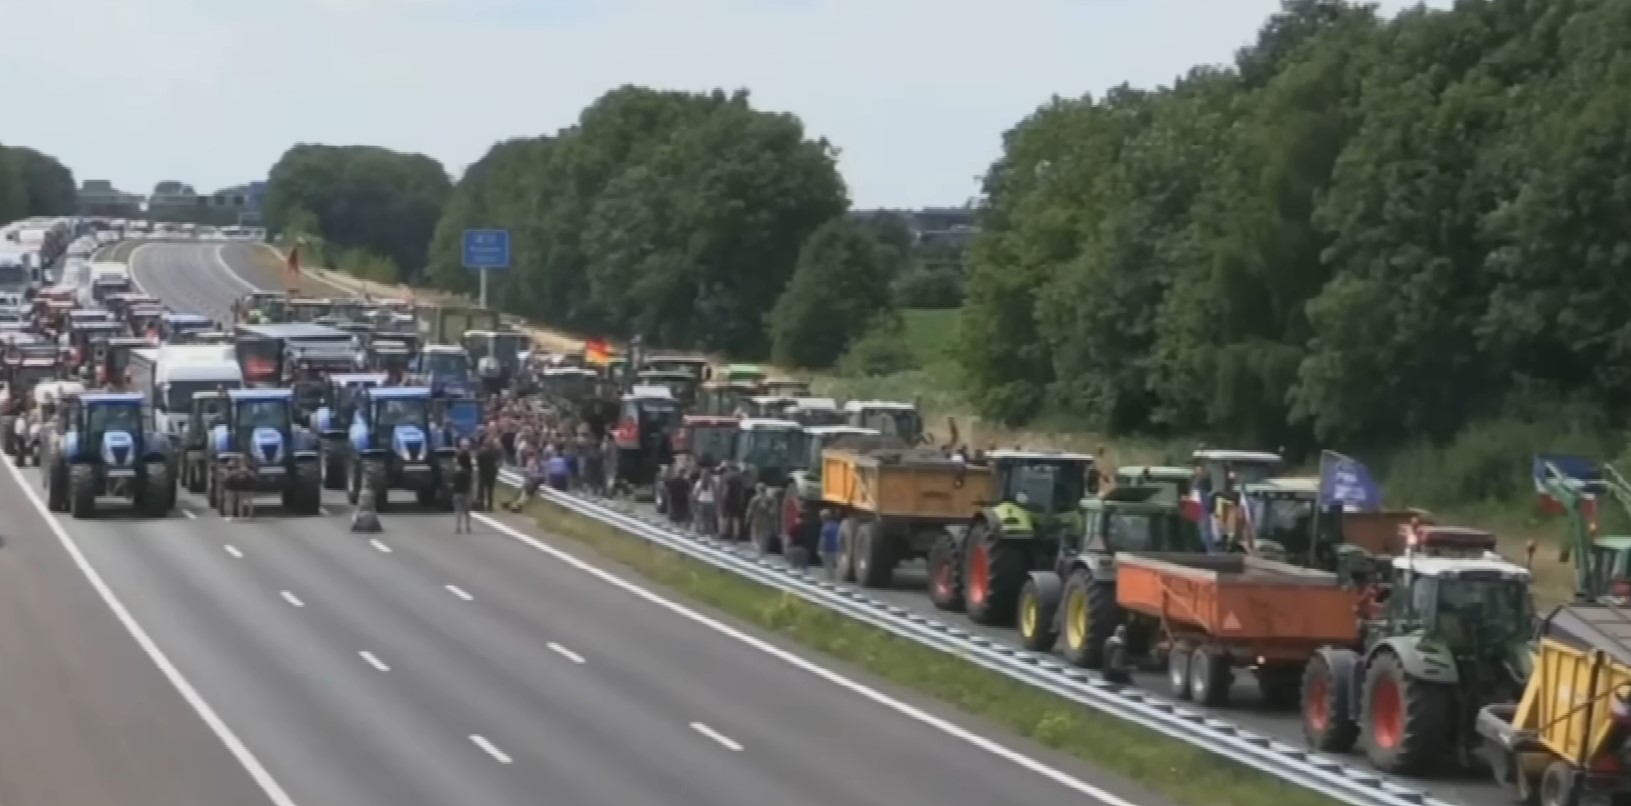 Dutch farm protests